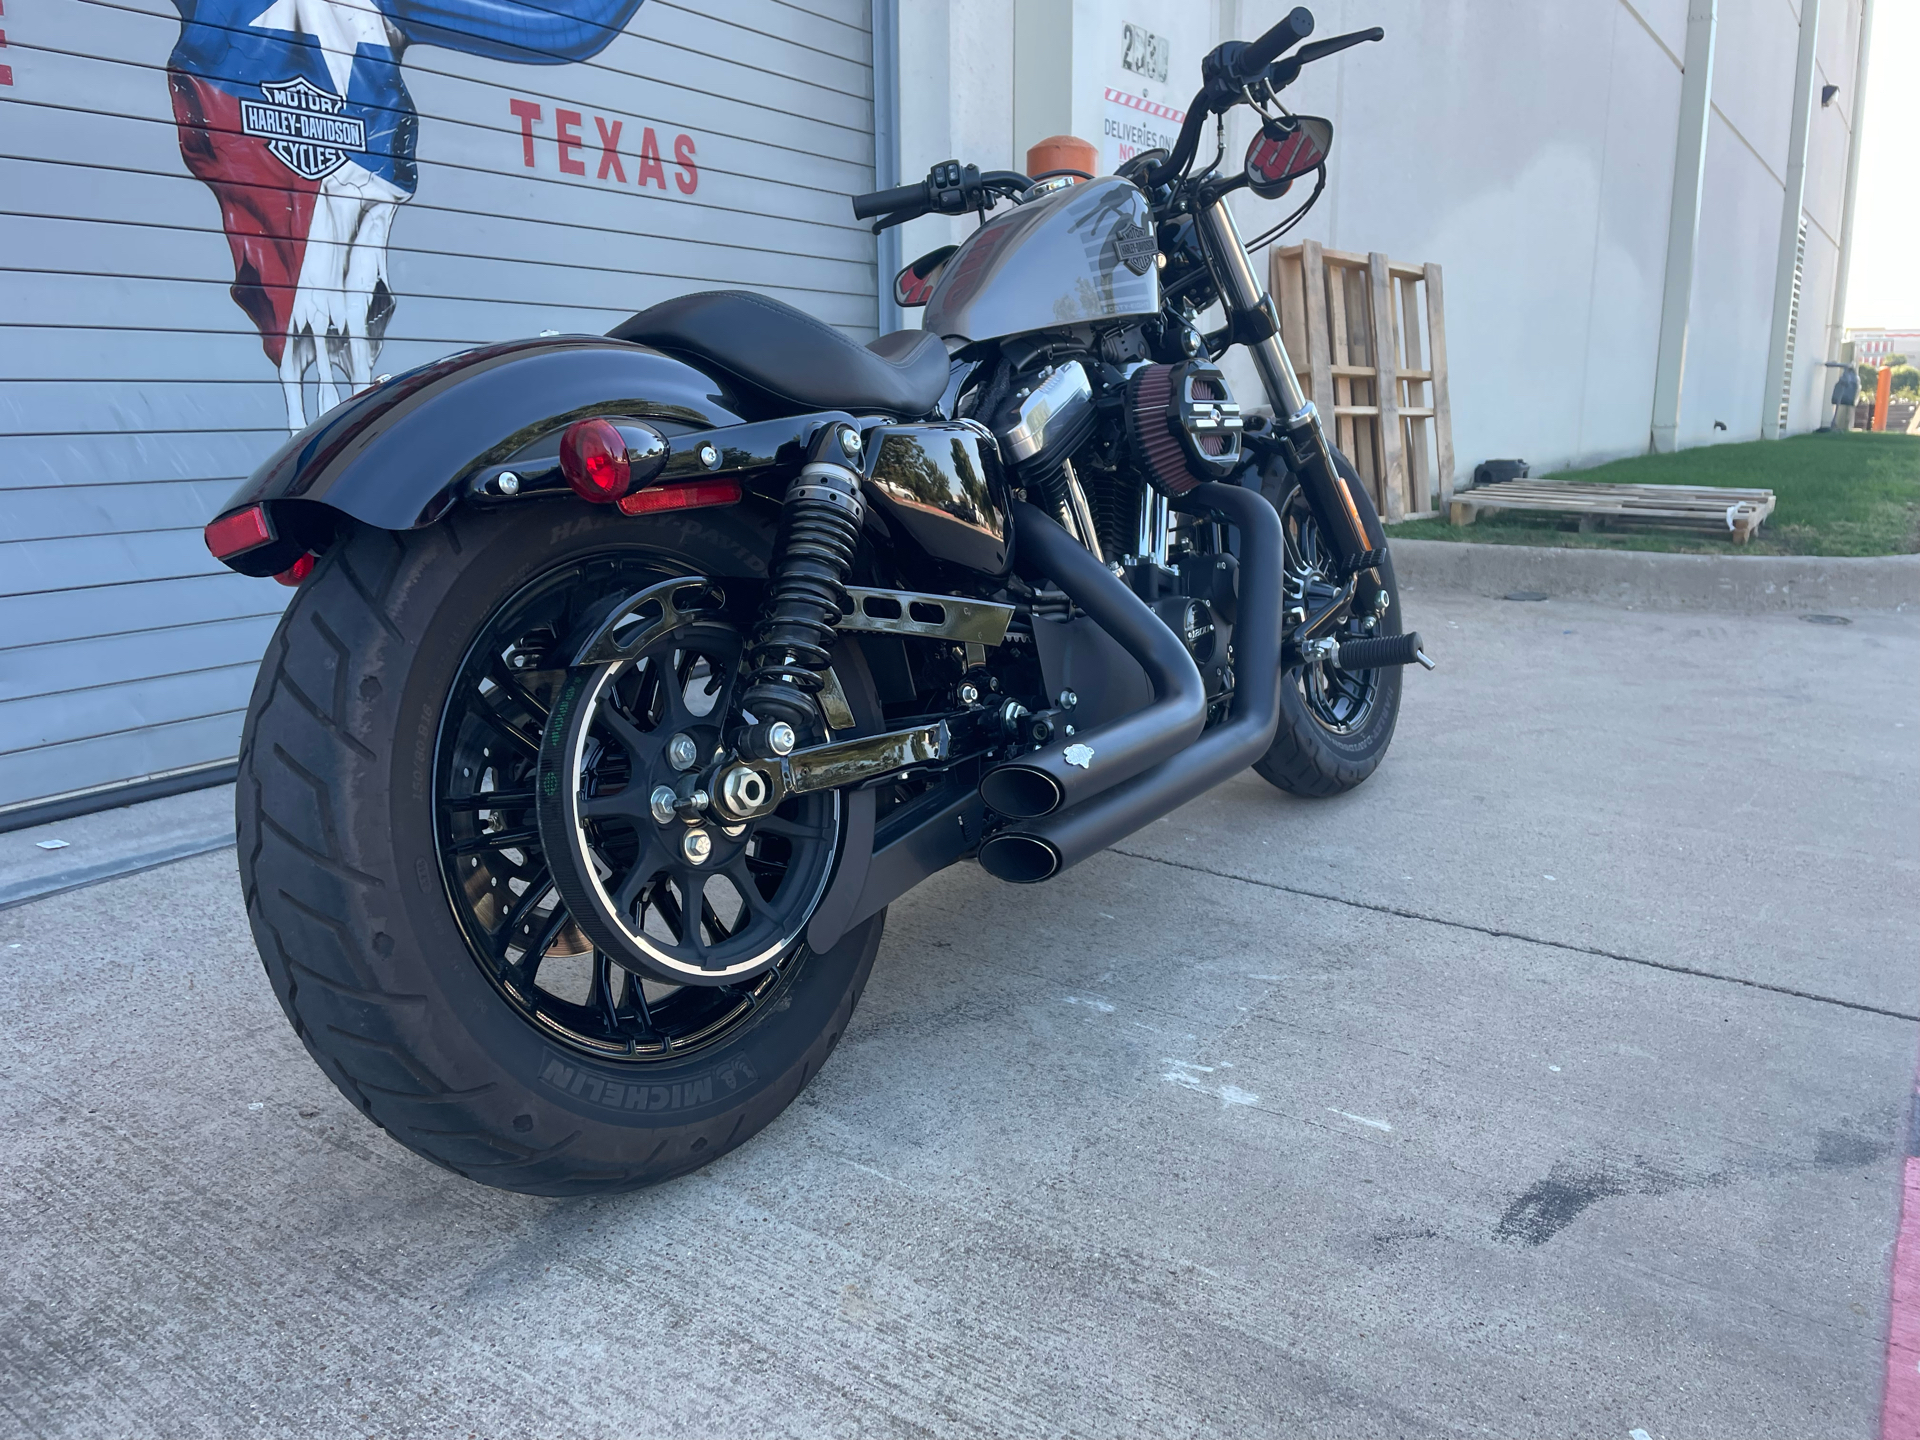 2017 Harley-Davidson Forty-Eight® in Grand Prairie, Texas - Photo 5